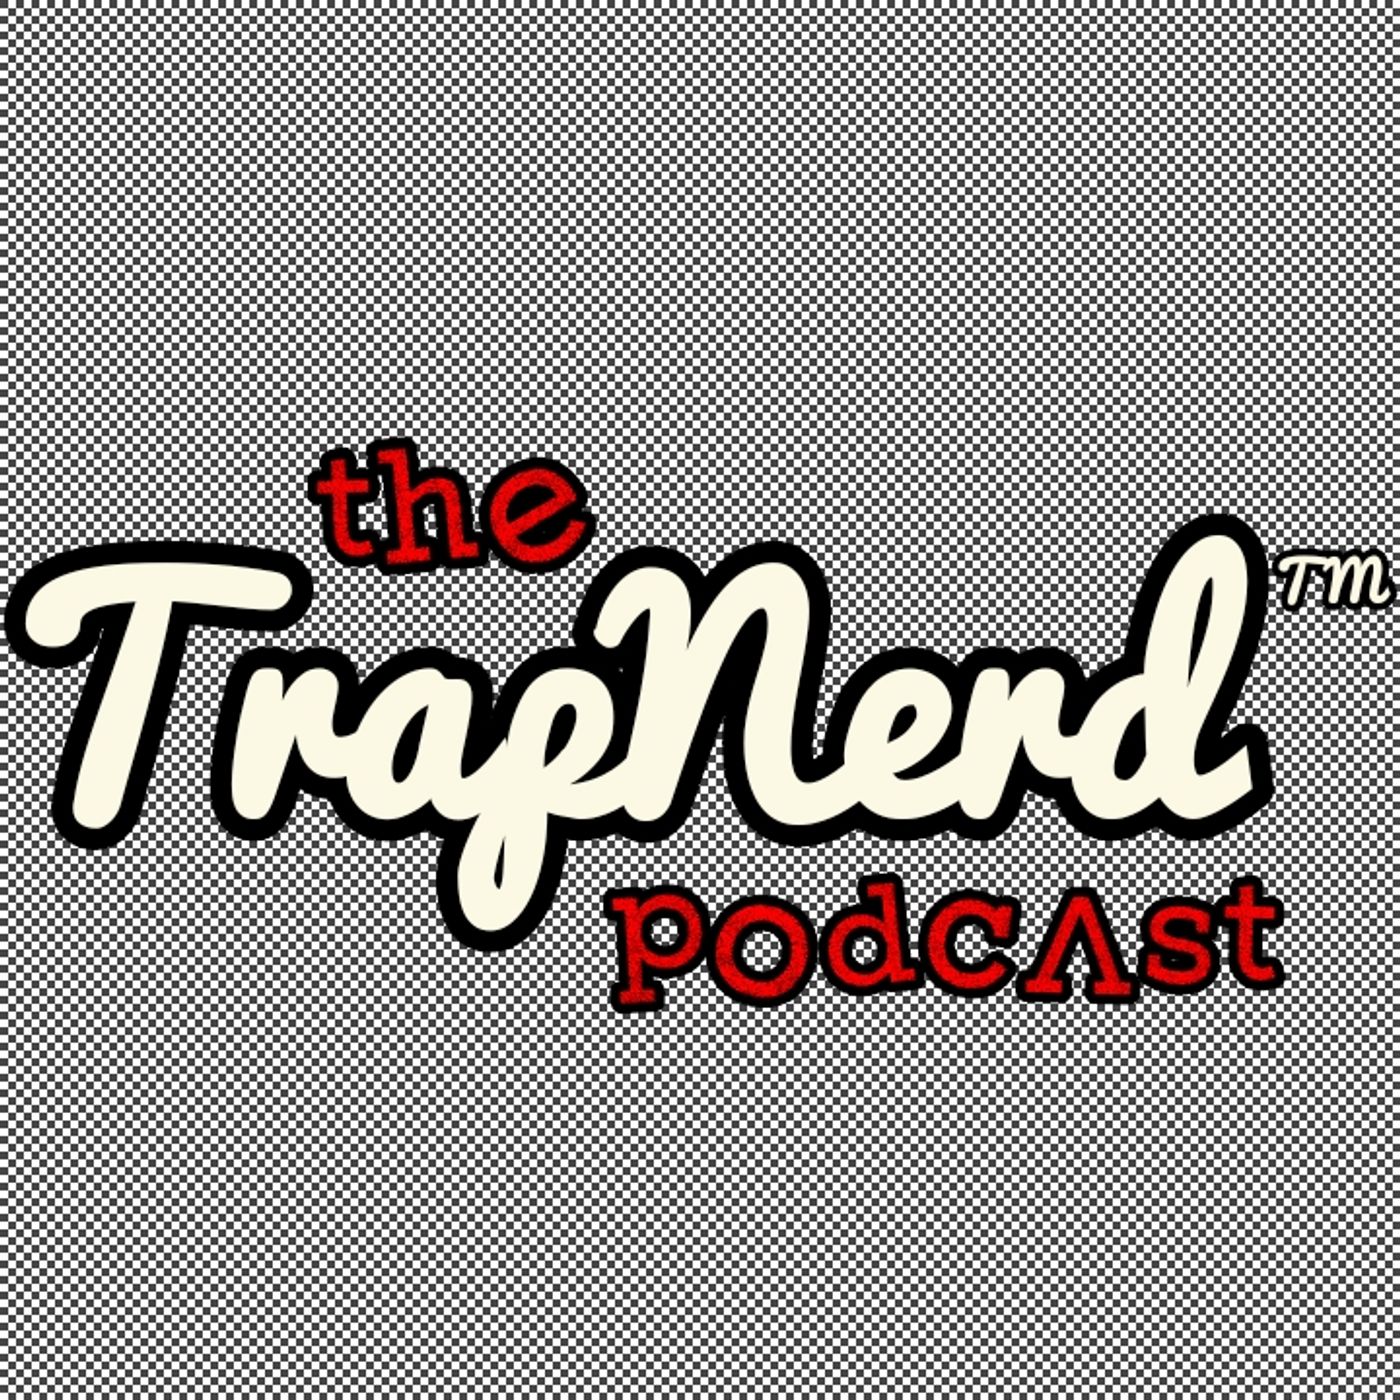 The TrapNerd Podcast